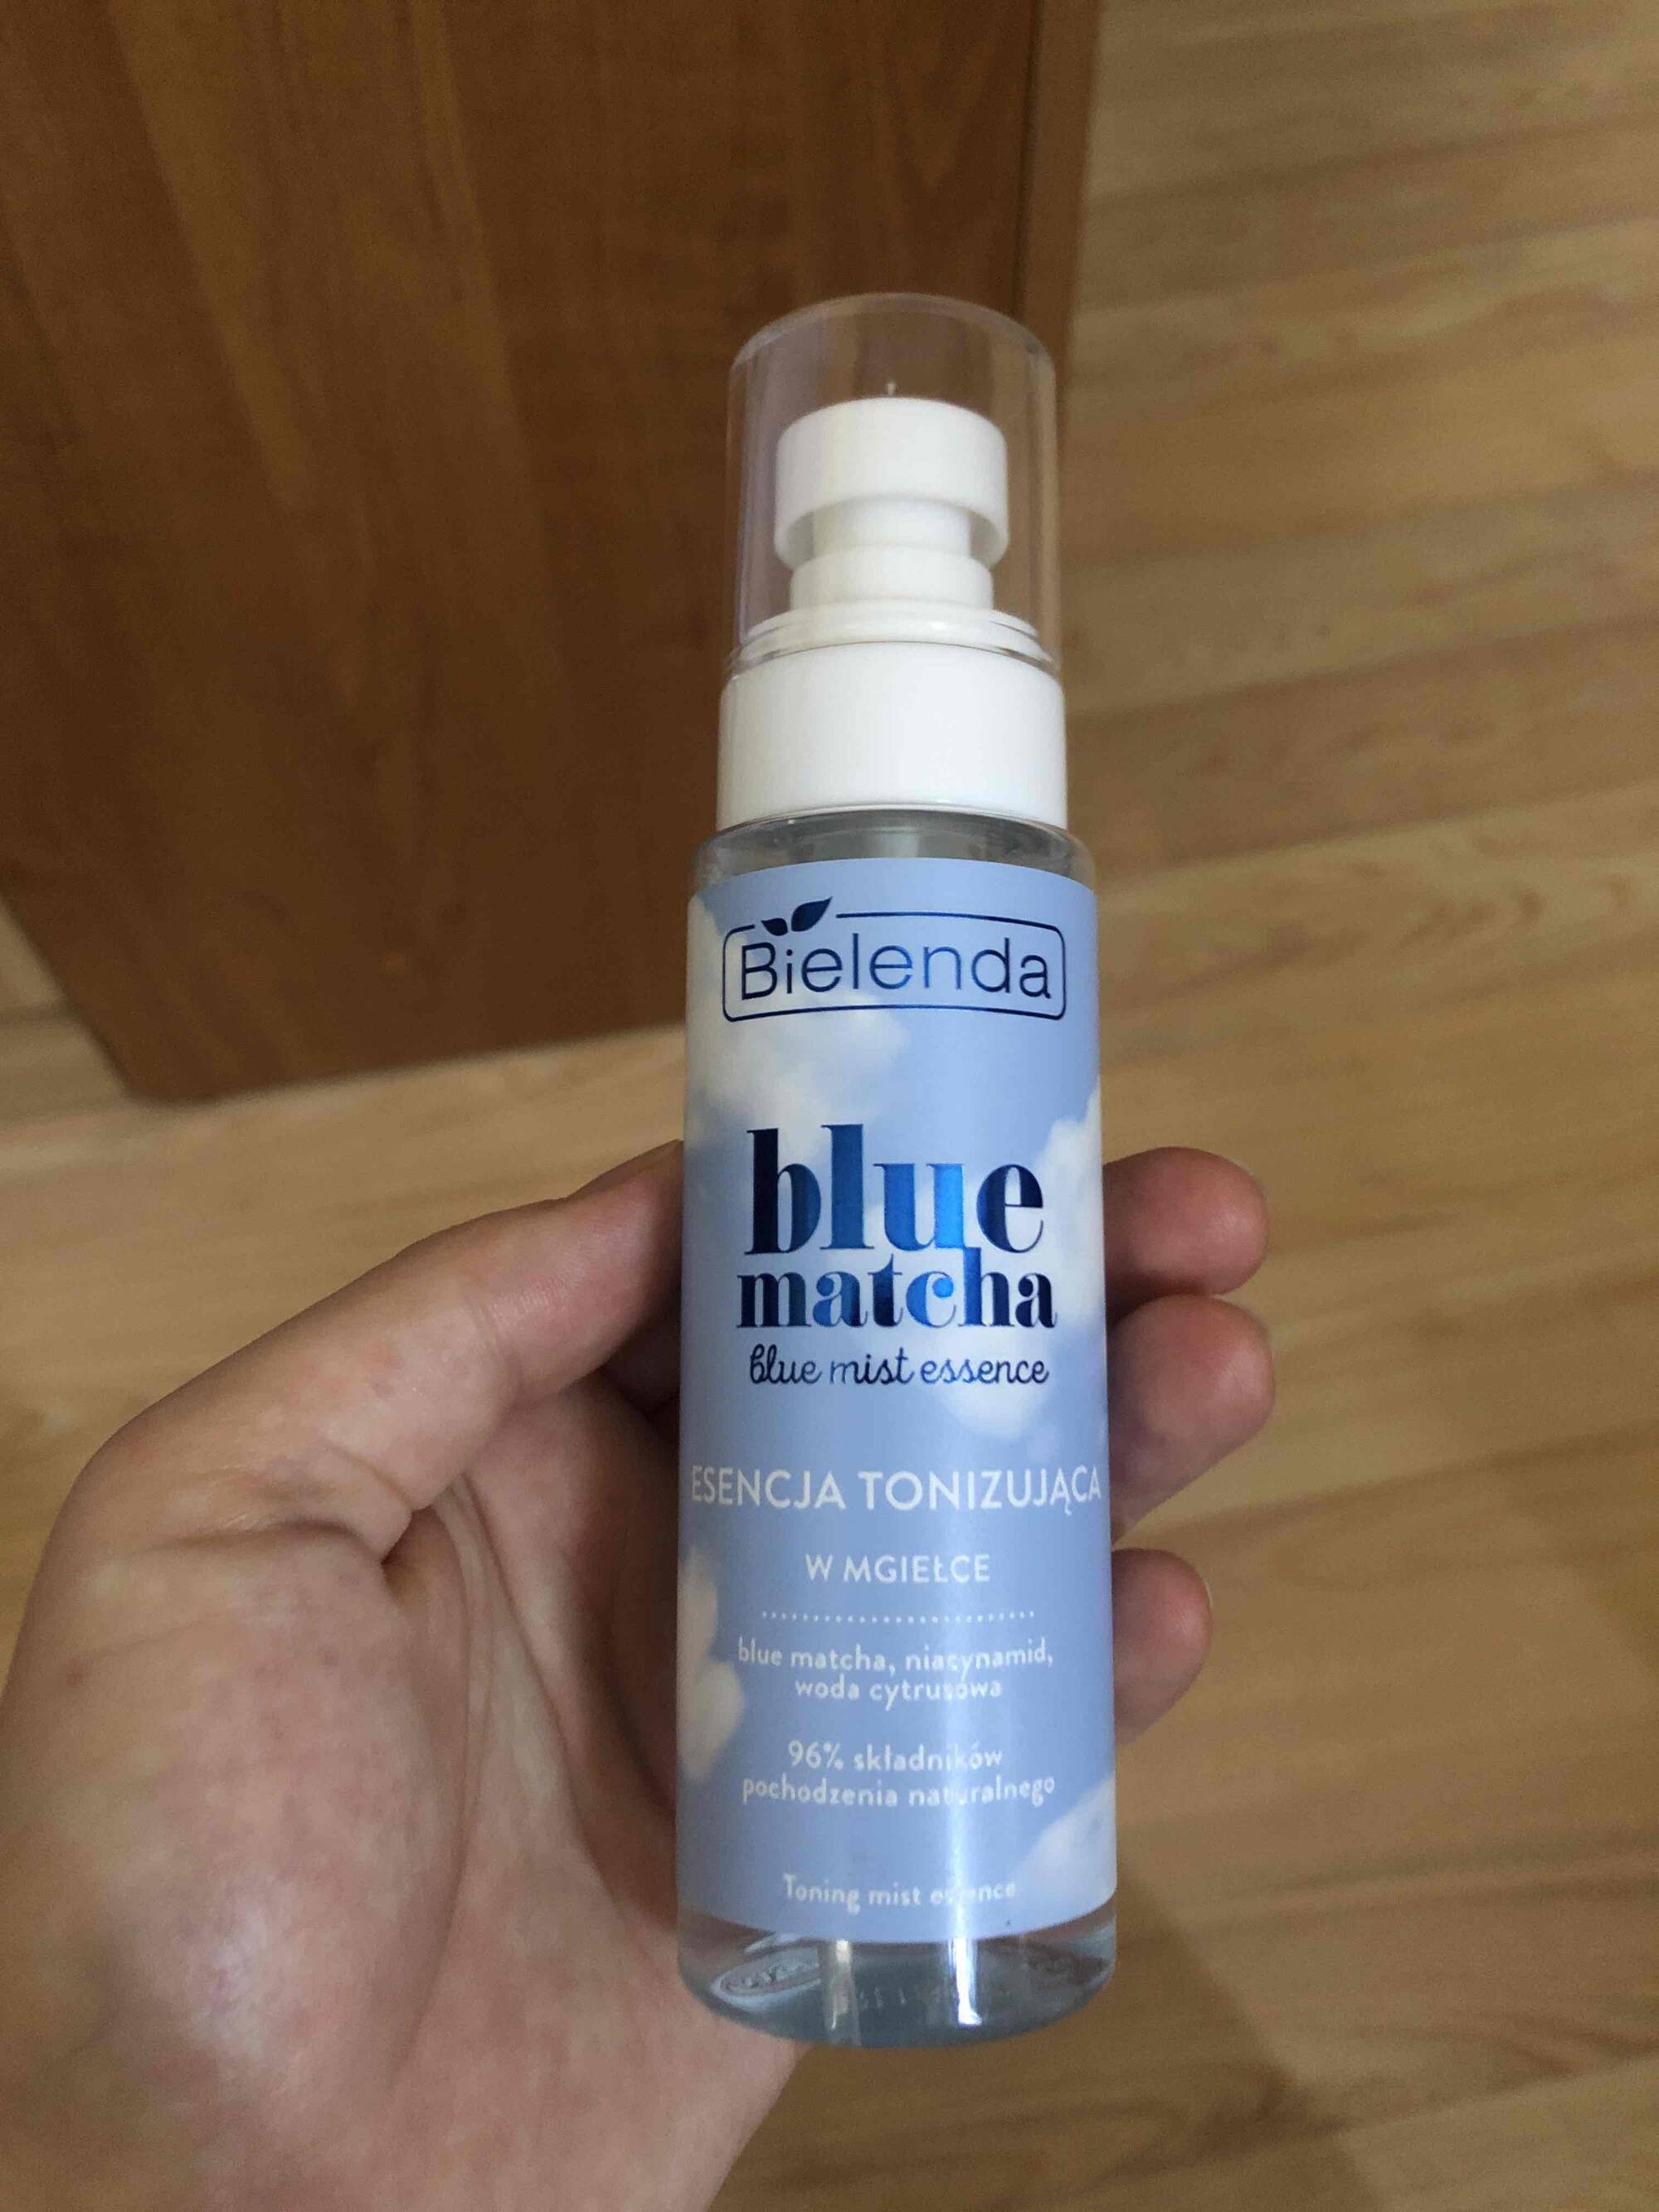 BIELENDA - Blue Matcha - Toning mist essence